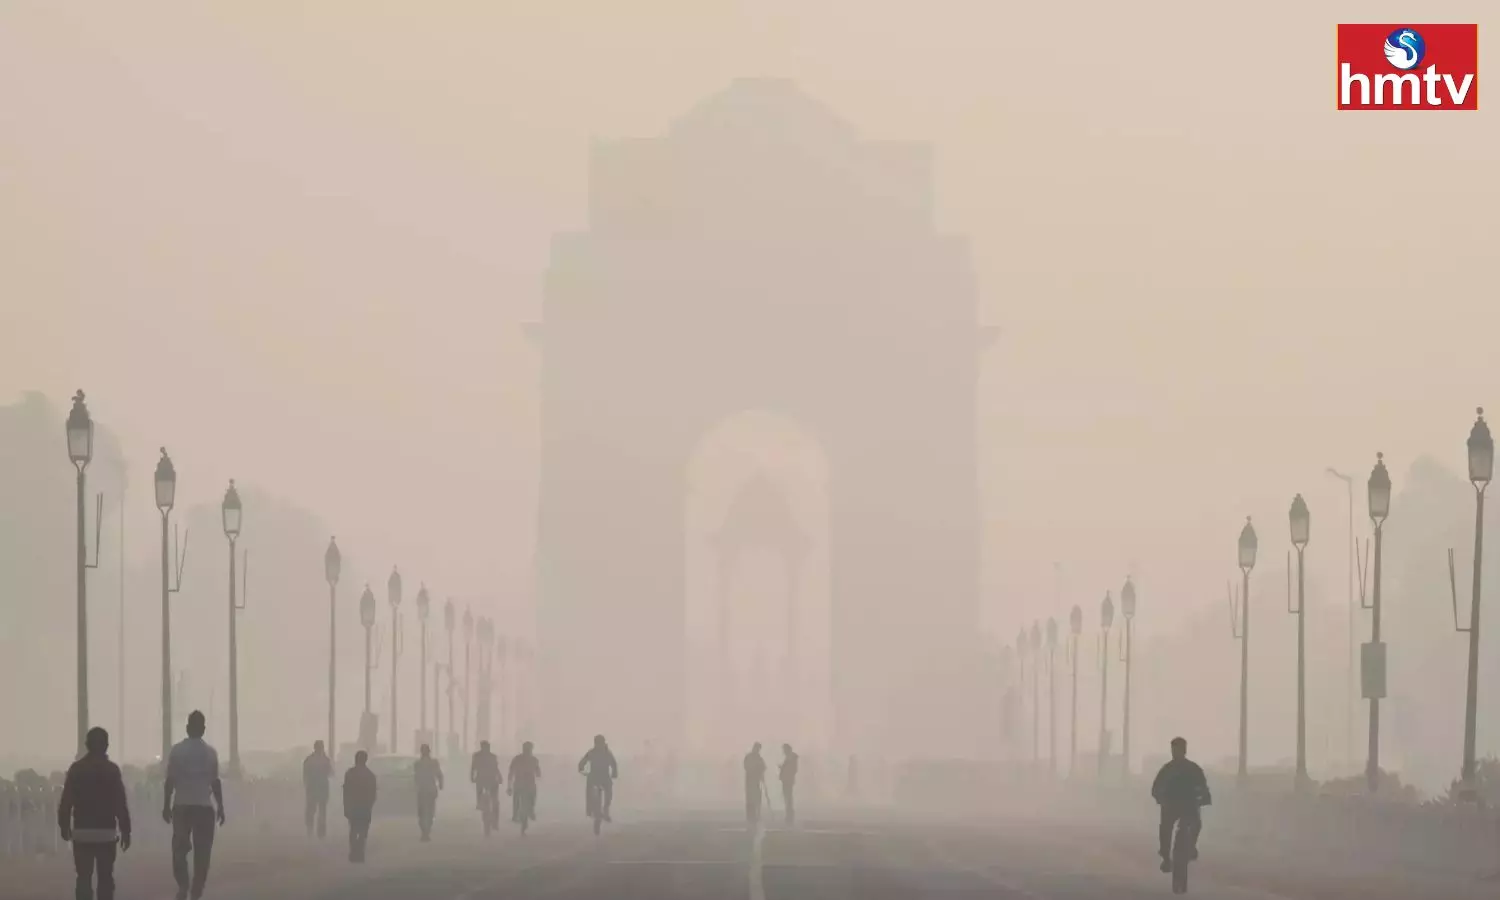 Heavy Air pollution in Delhi